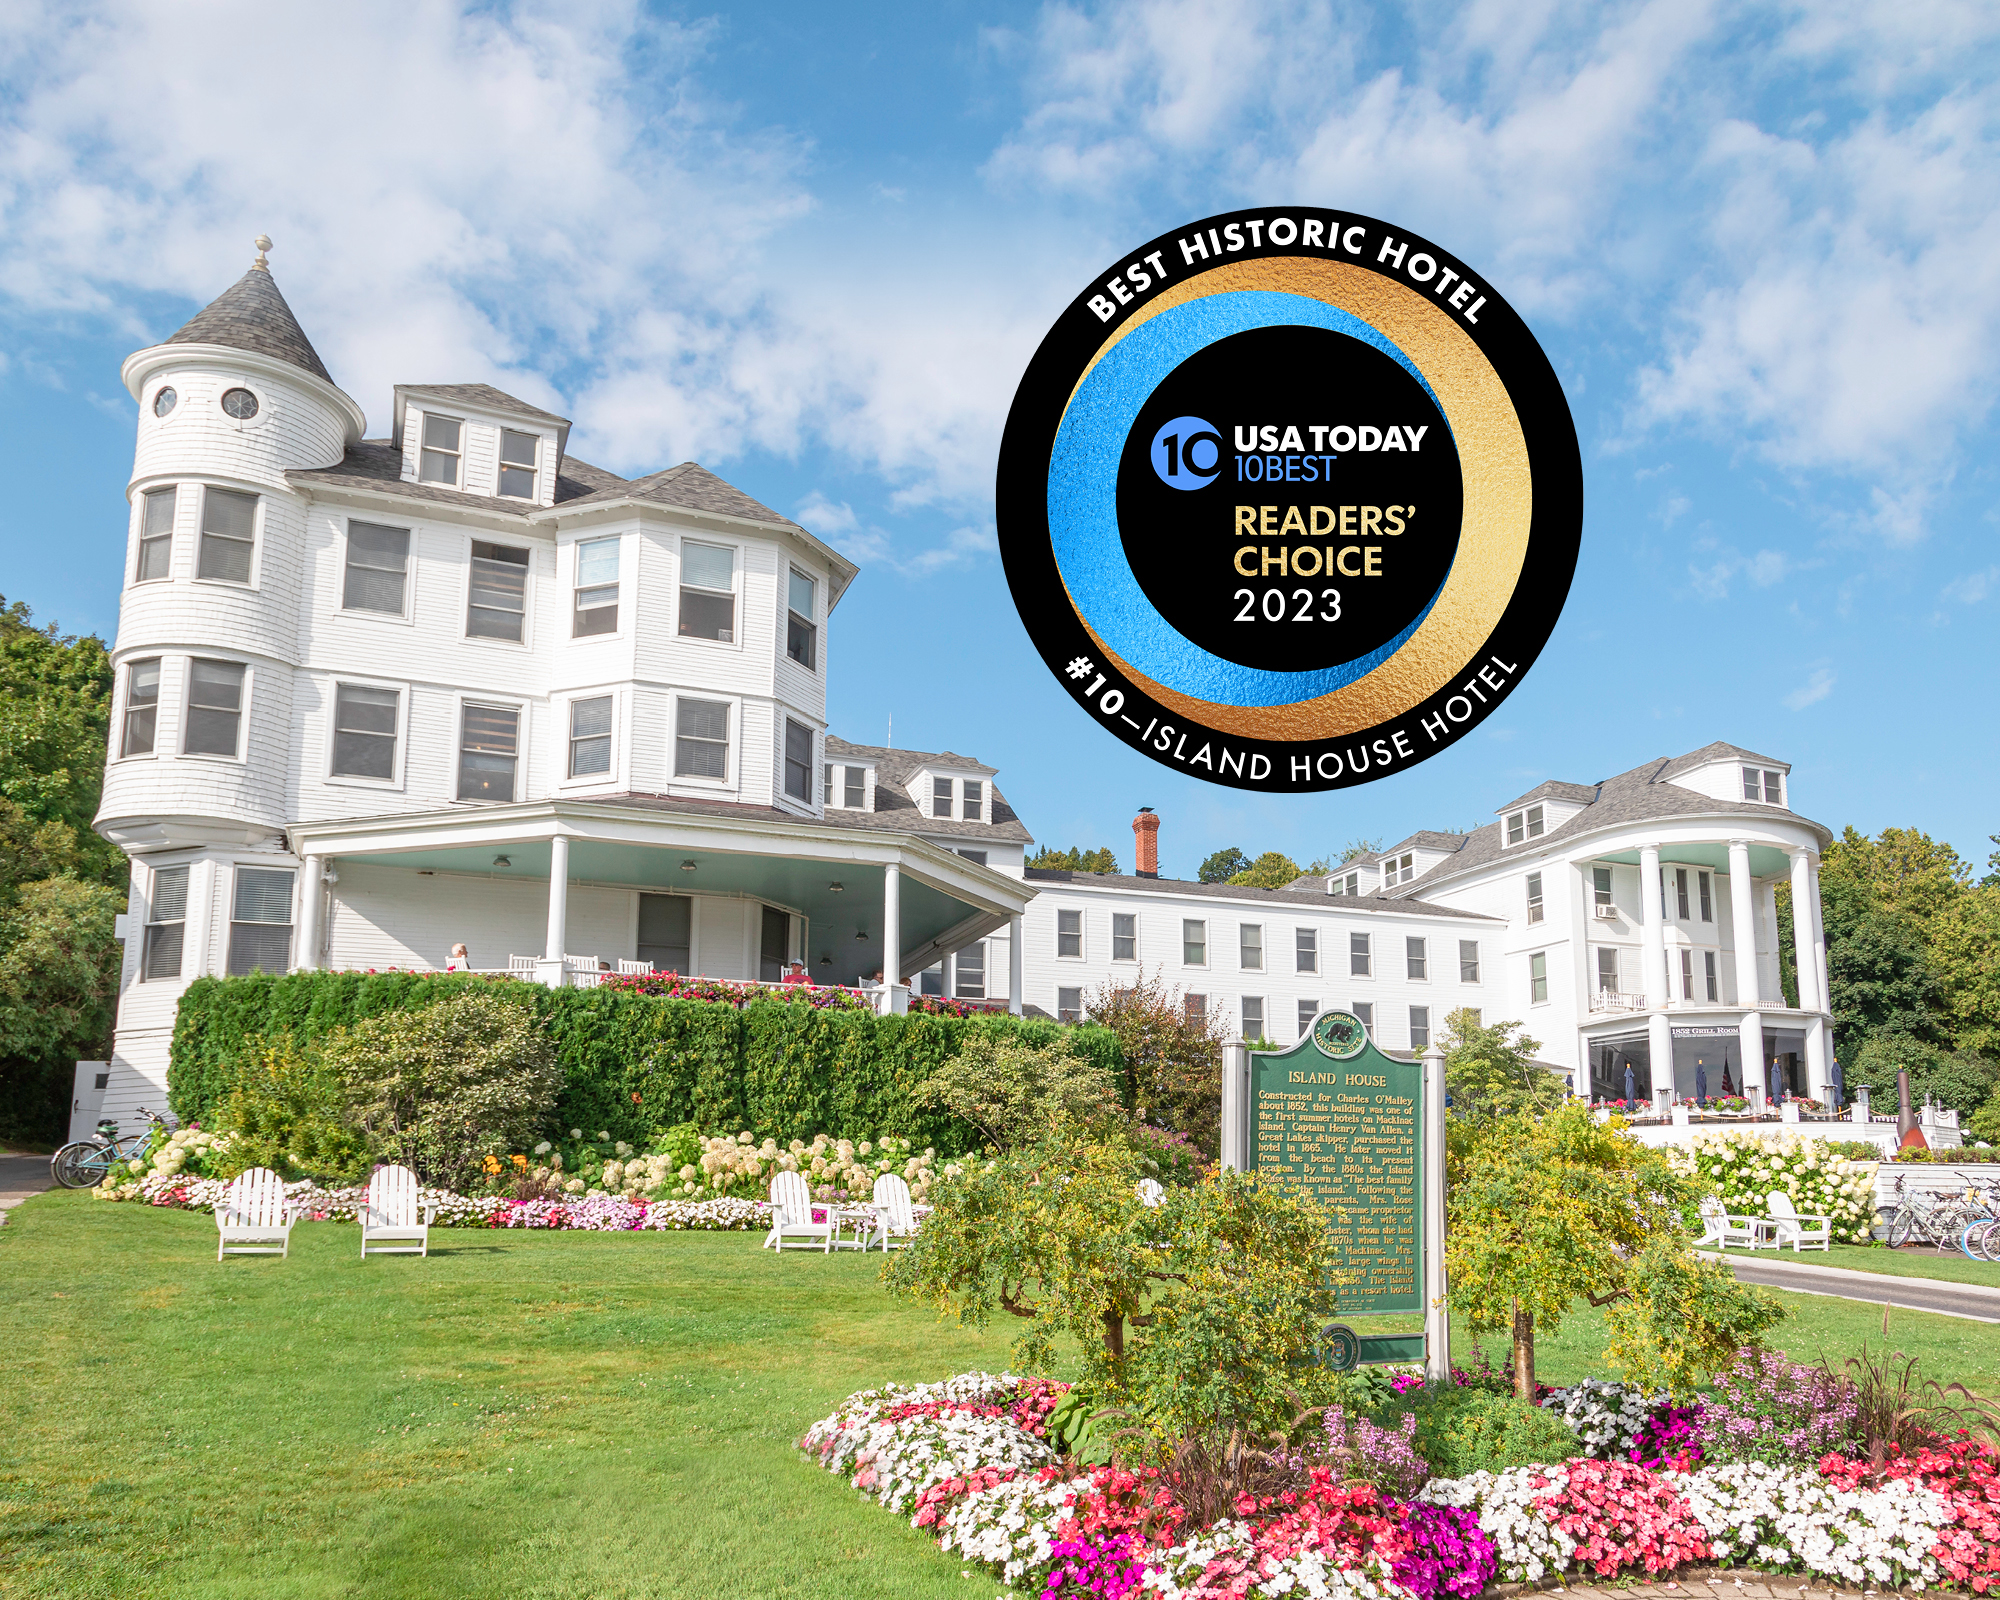 Island House Hotel on Mackinac Island USA Today Award